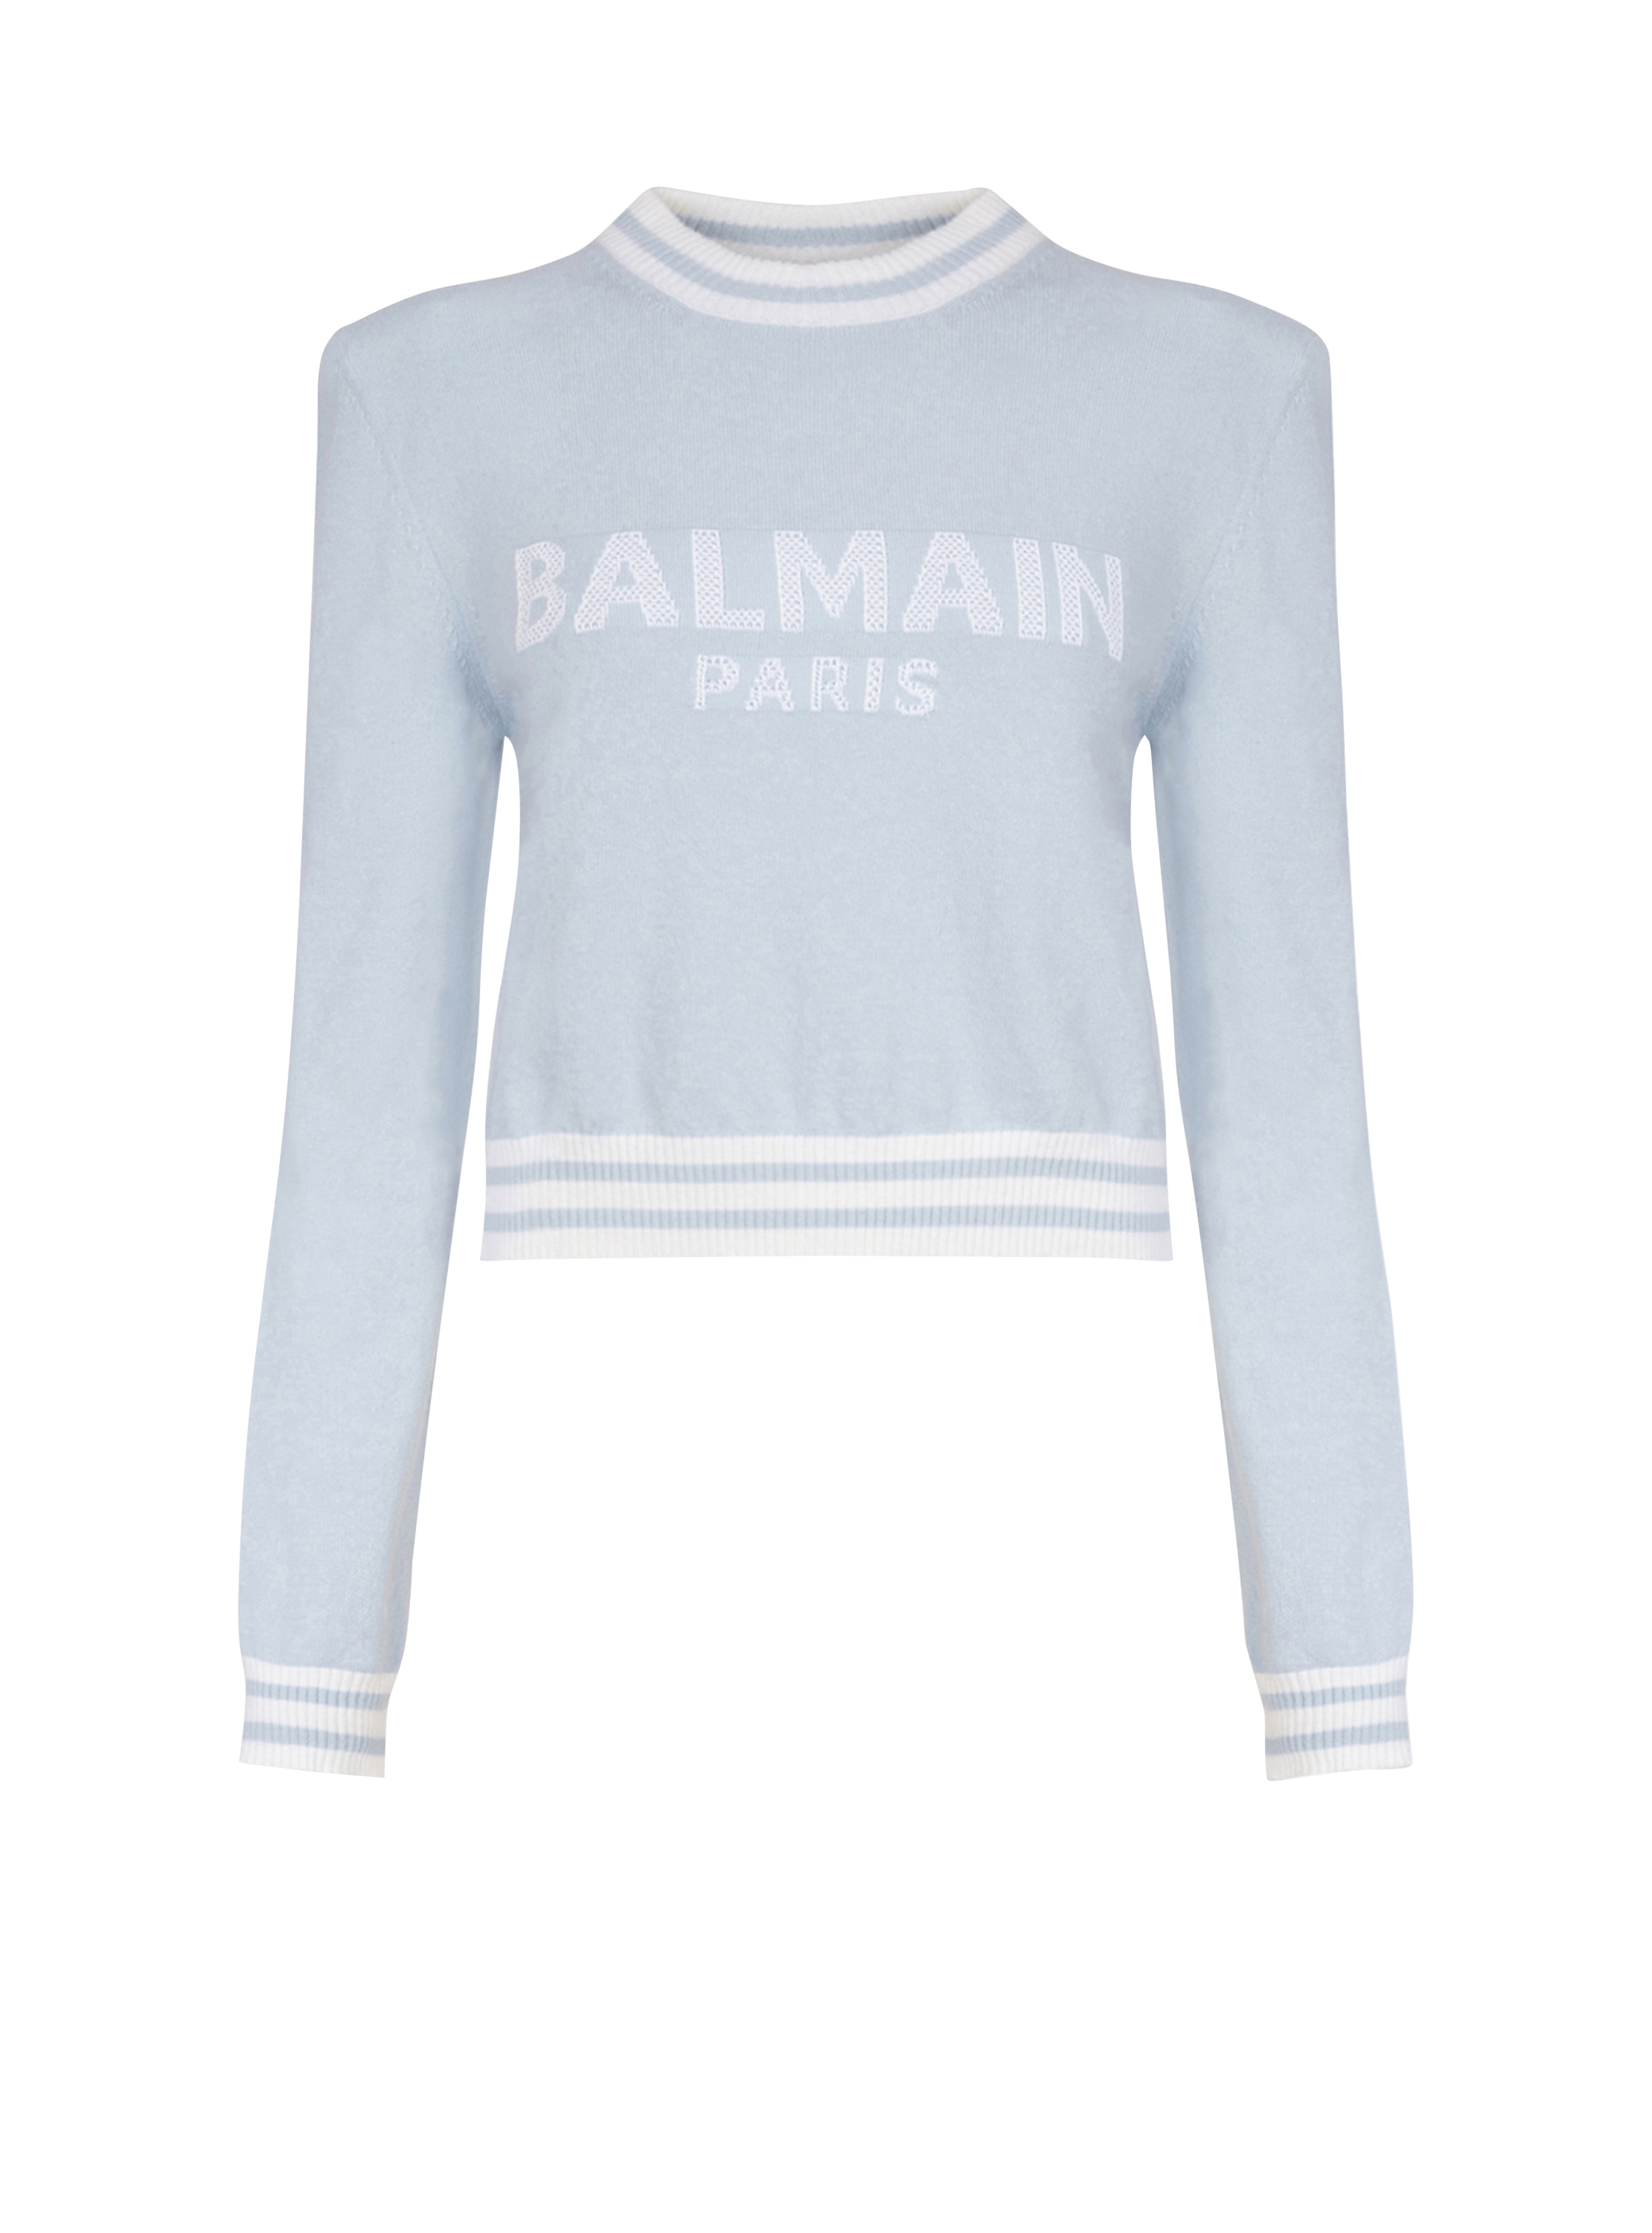 Cropped wool sweatshirt with Balmain logo, blue